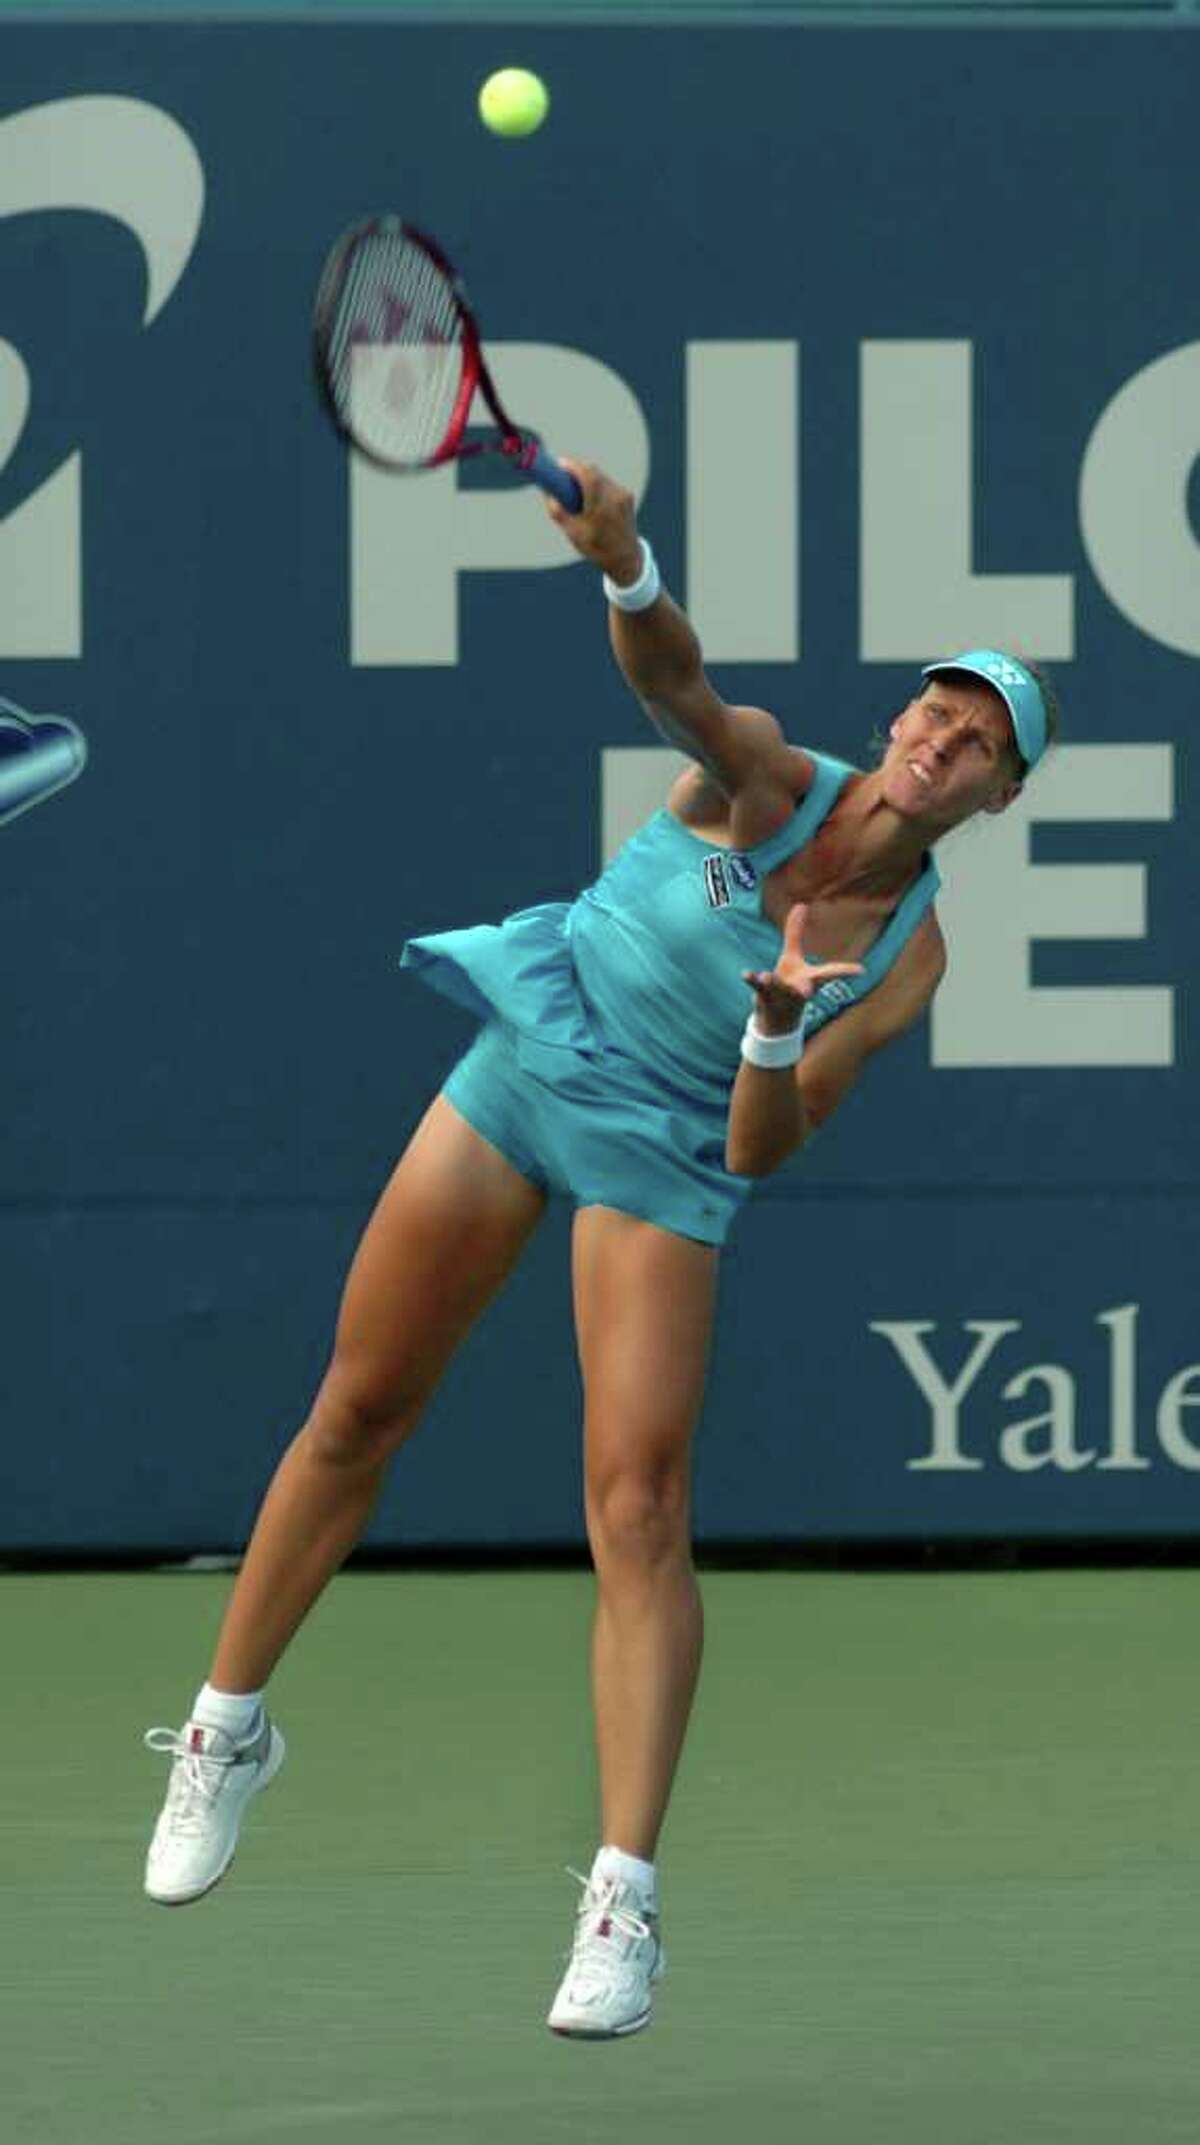 Elena Dementieva serves the ball to her opponent Marion Bartoli at the Pilot Pen tennis tournament in New Haven, Conn. on Thursday August 26, 2010. Dementieva beat Bartoli 6-3, 3-6, 6-2.